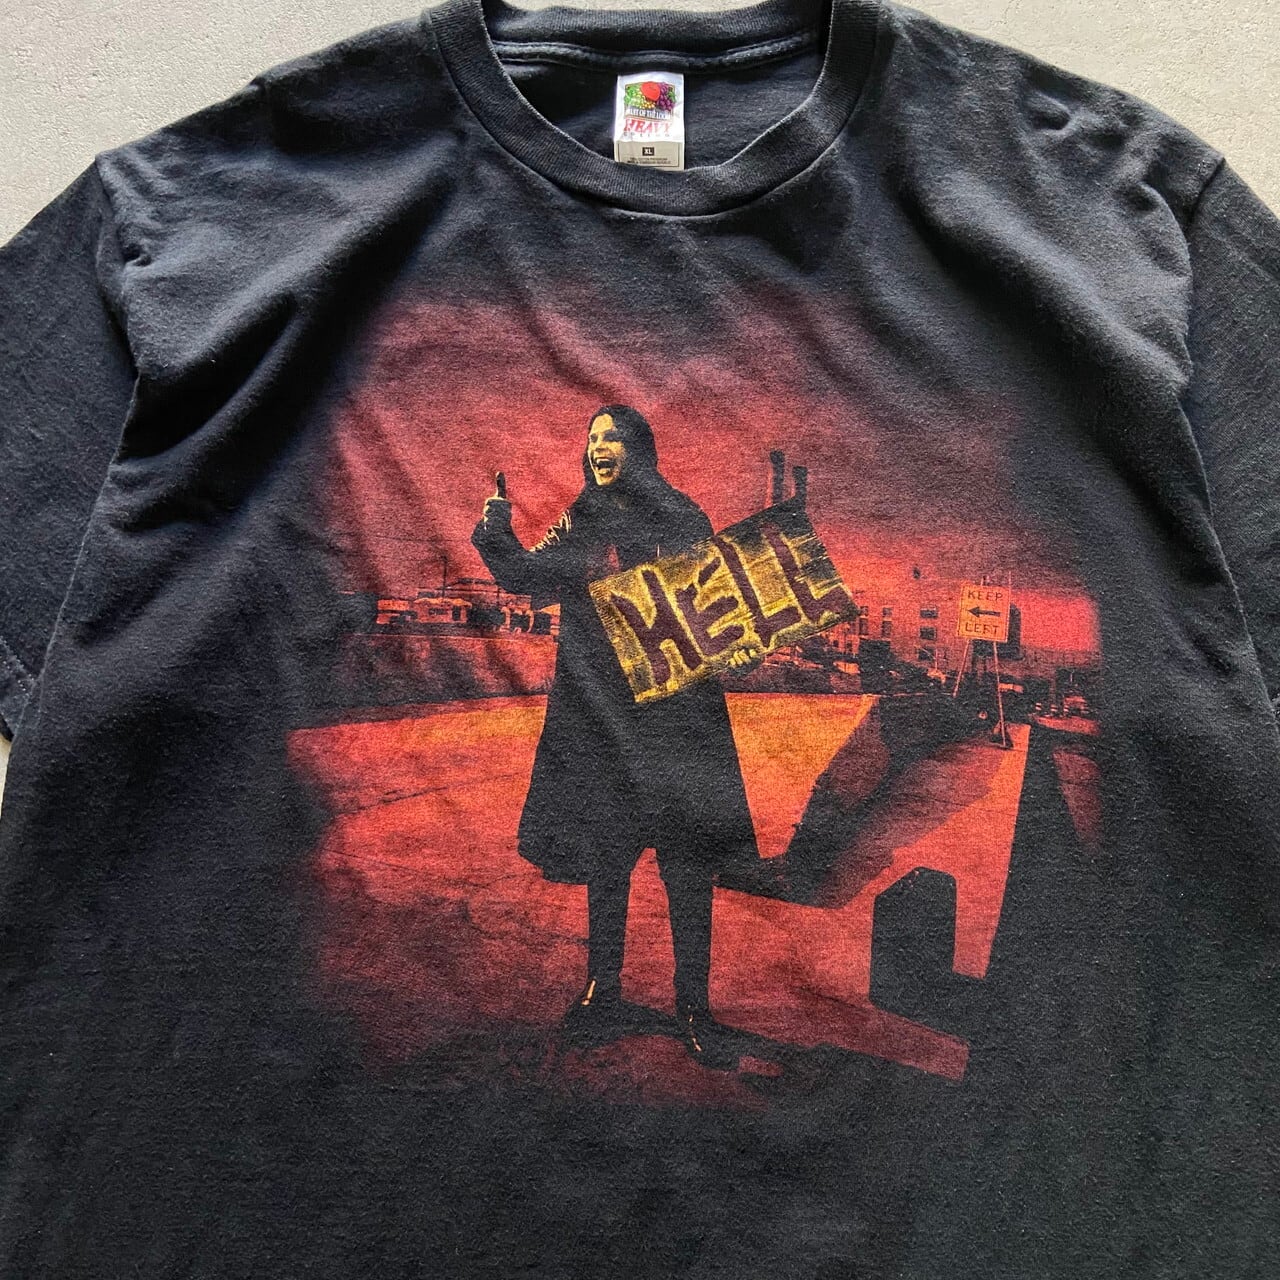 Ozzy Osbourne オジーオズボーン Tシャツ ビンテージ ◉デザイン